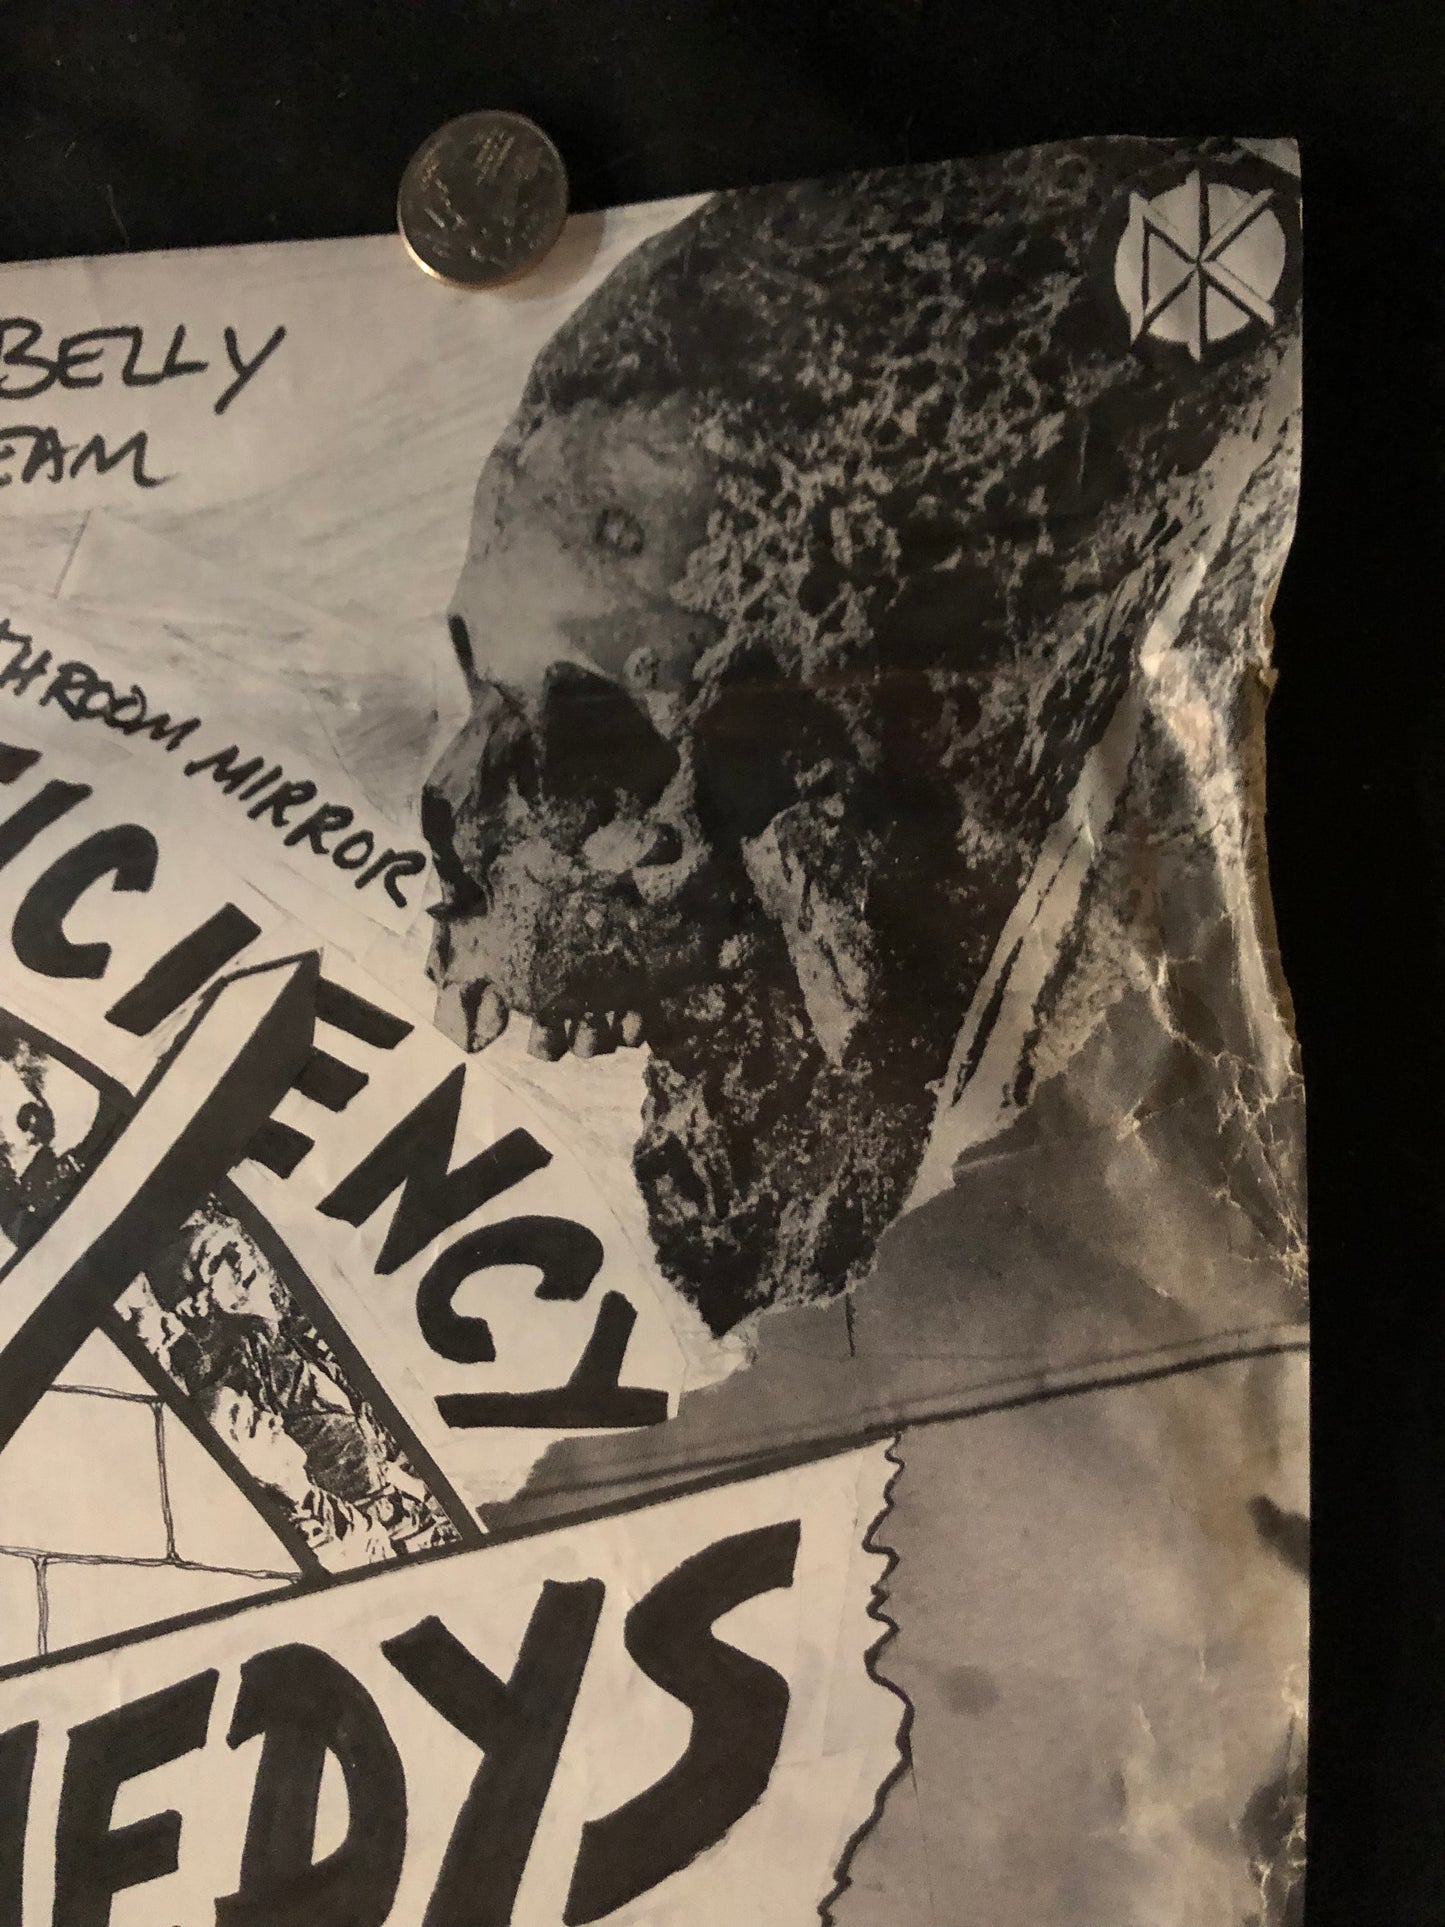 Dead Kennedys "Destroy Efficiency" Vintage Tour Poster (1983)